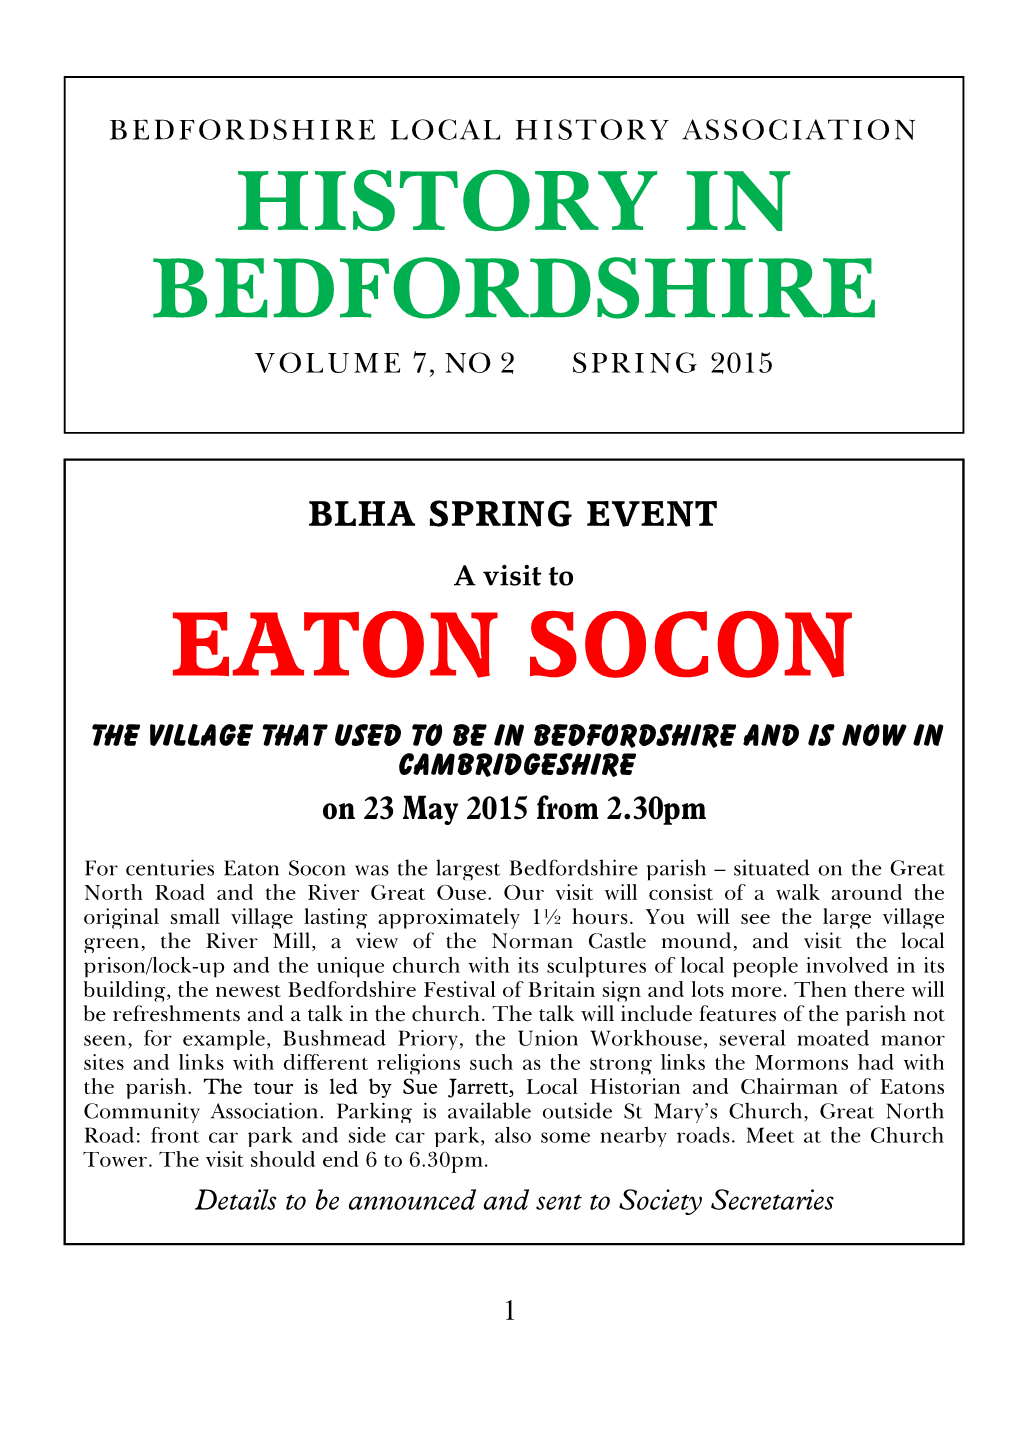 History in Bedfordshire Eaton Socon